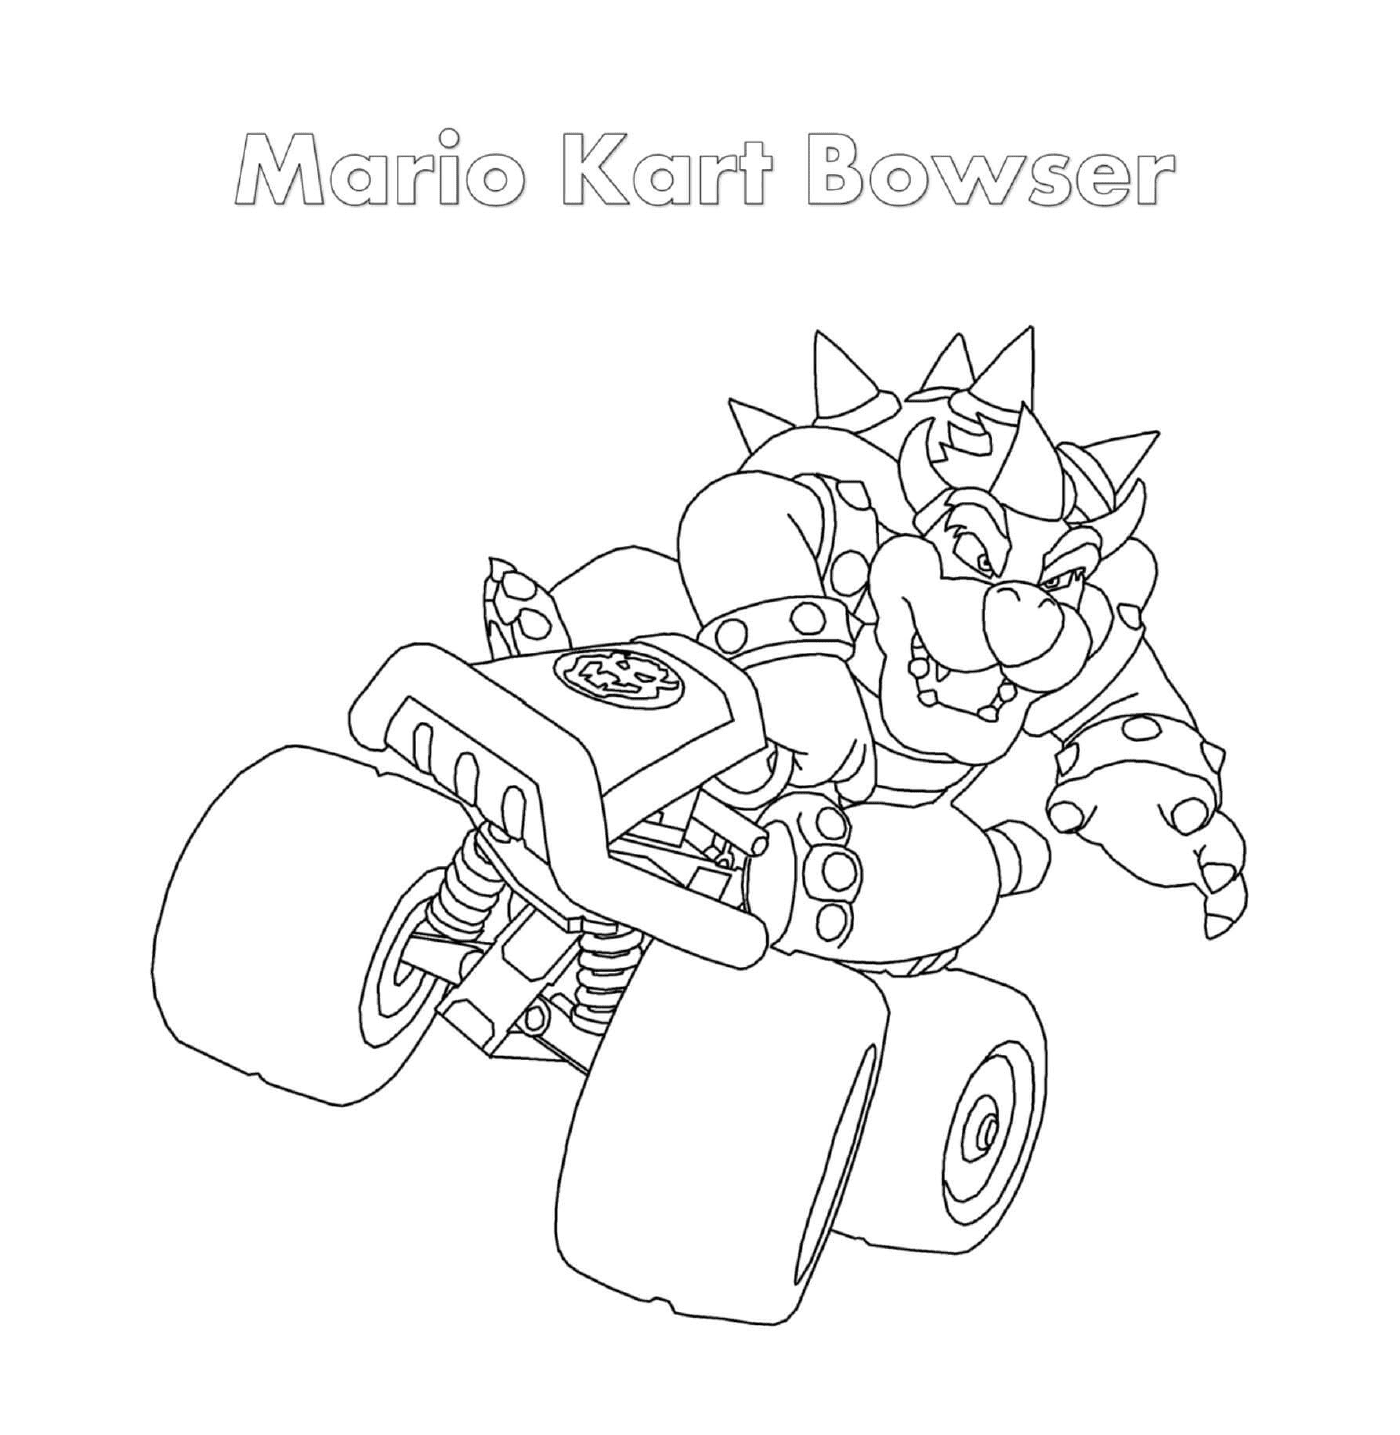   Bowser dans Mario Kart 